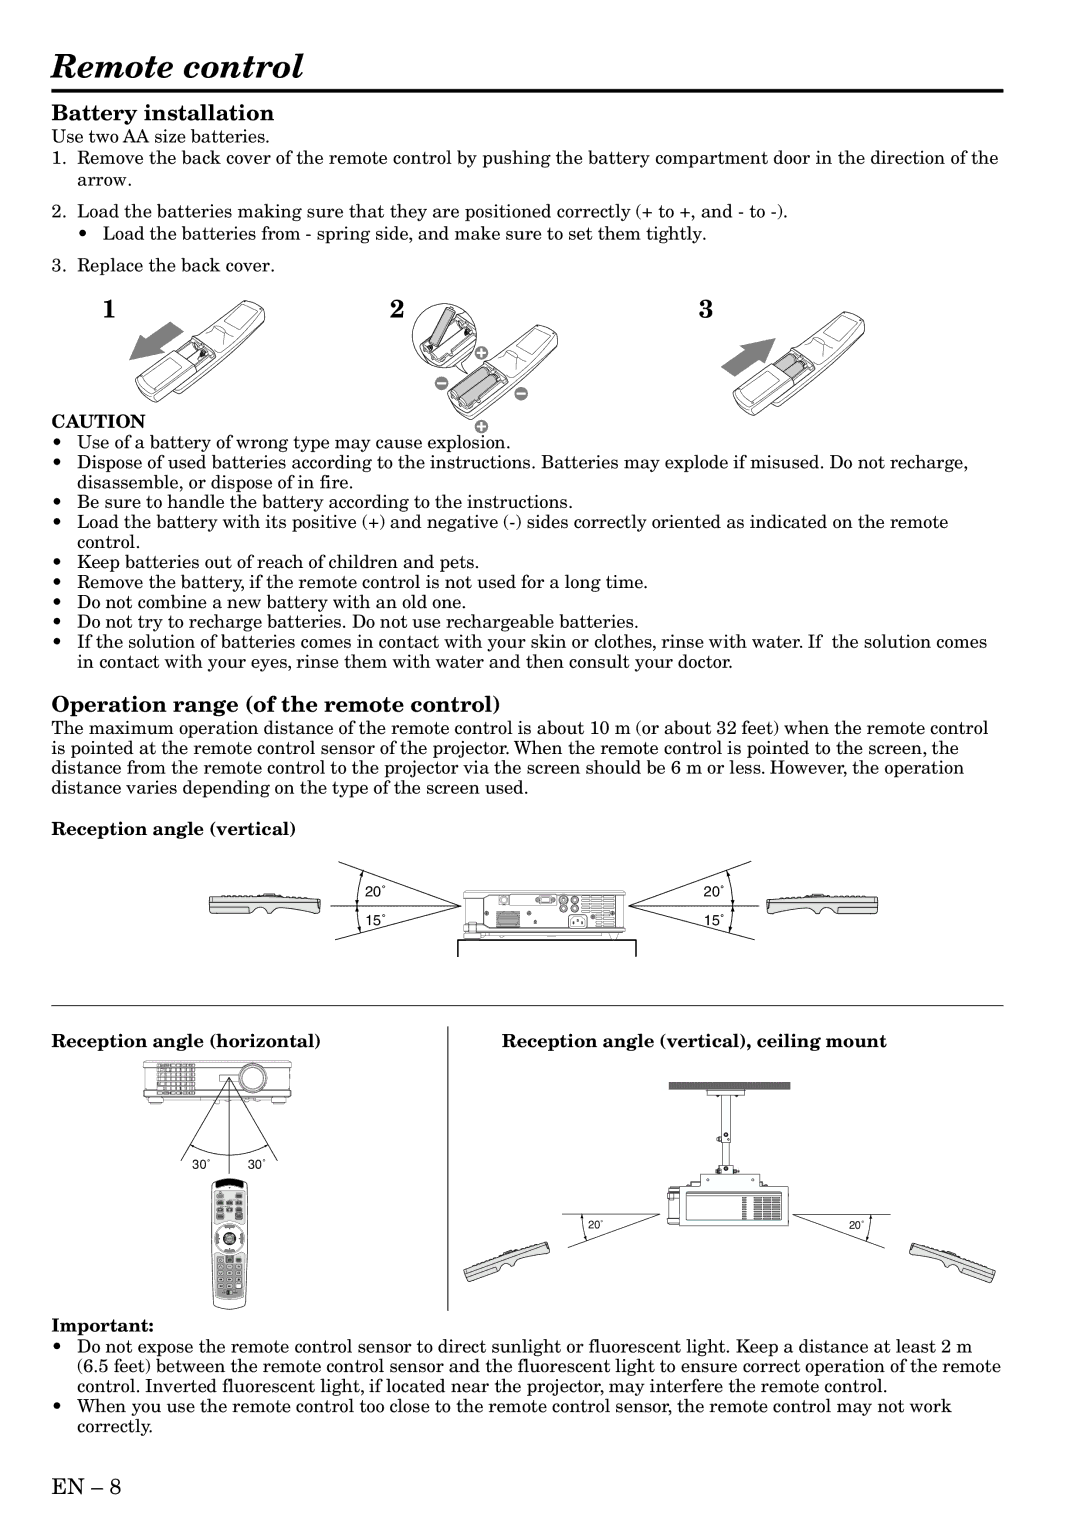 Mitsubishi Electronics HC3 user manual Remote control, Battery installation, Operation range of the remote control 